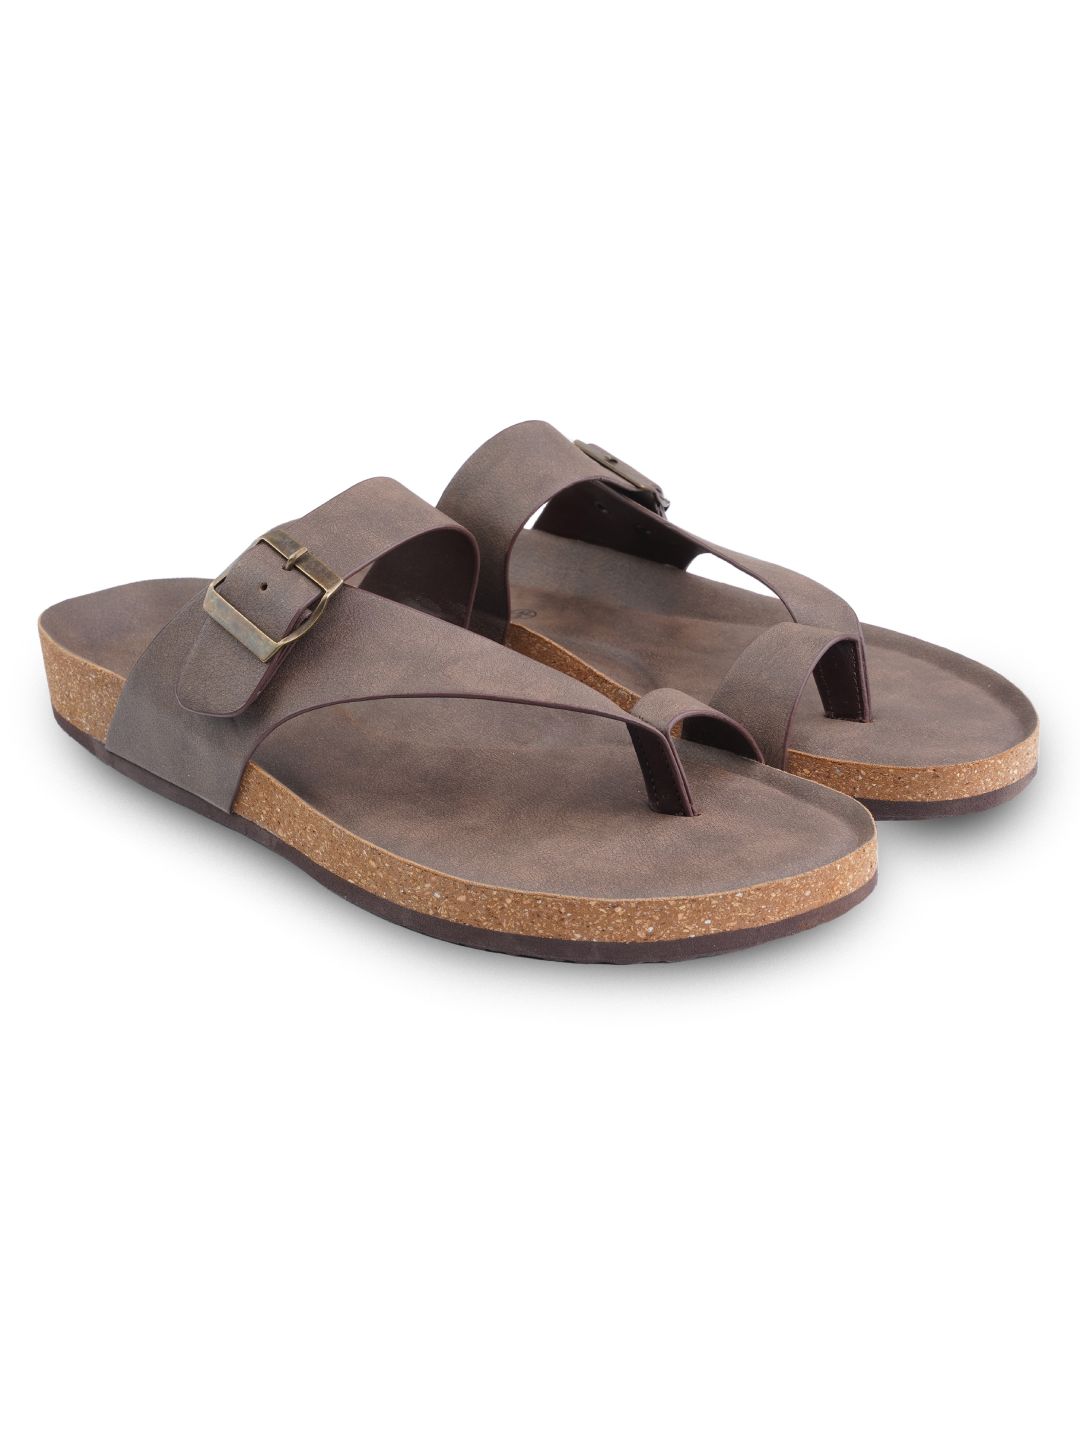 Pelle Corko Cappuccino: Exquisite Light Tan Cork Sandals for Men | dmodot